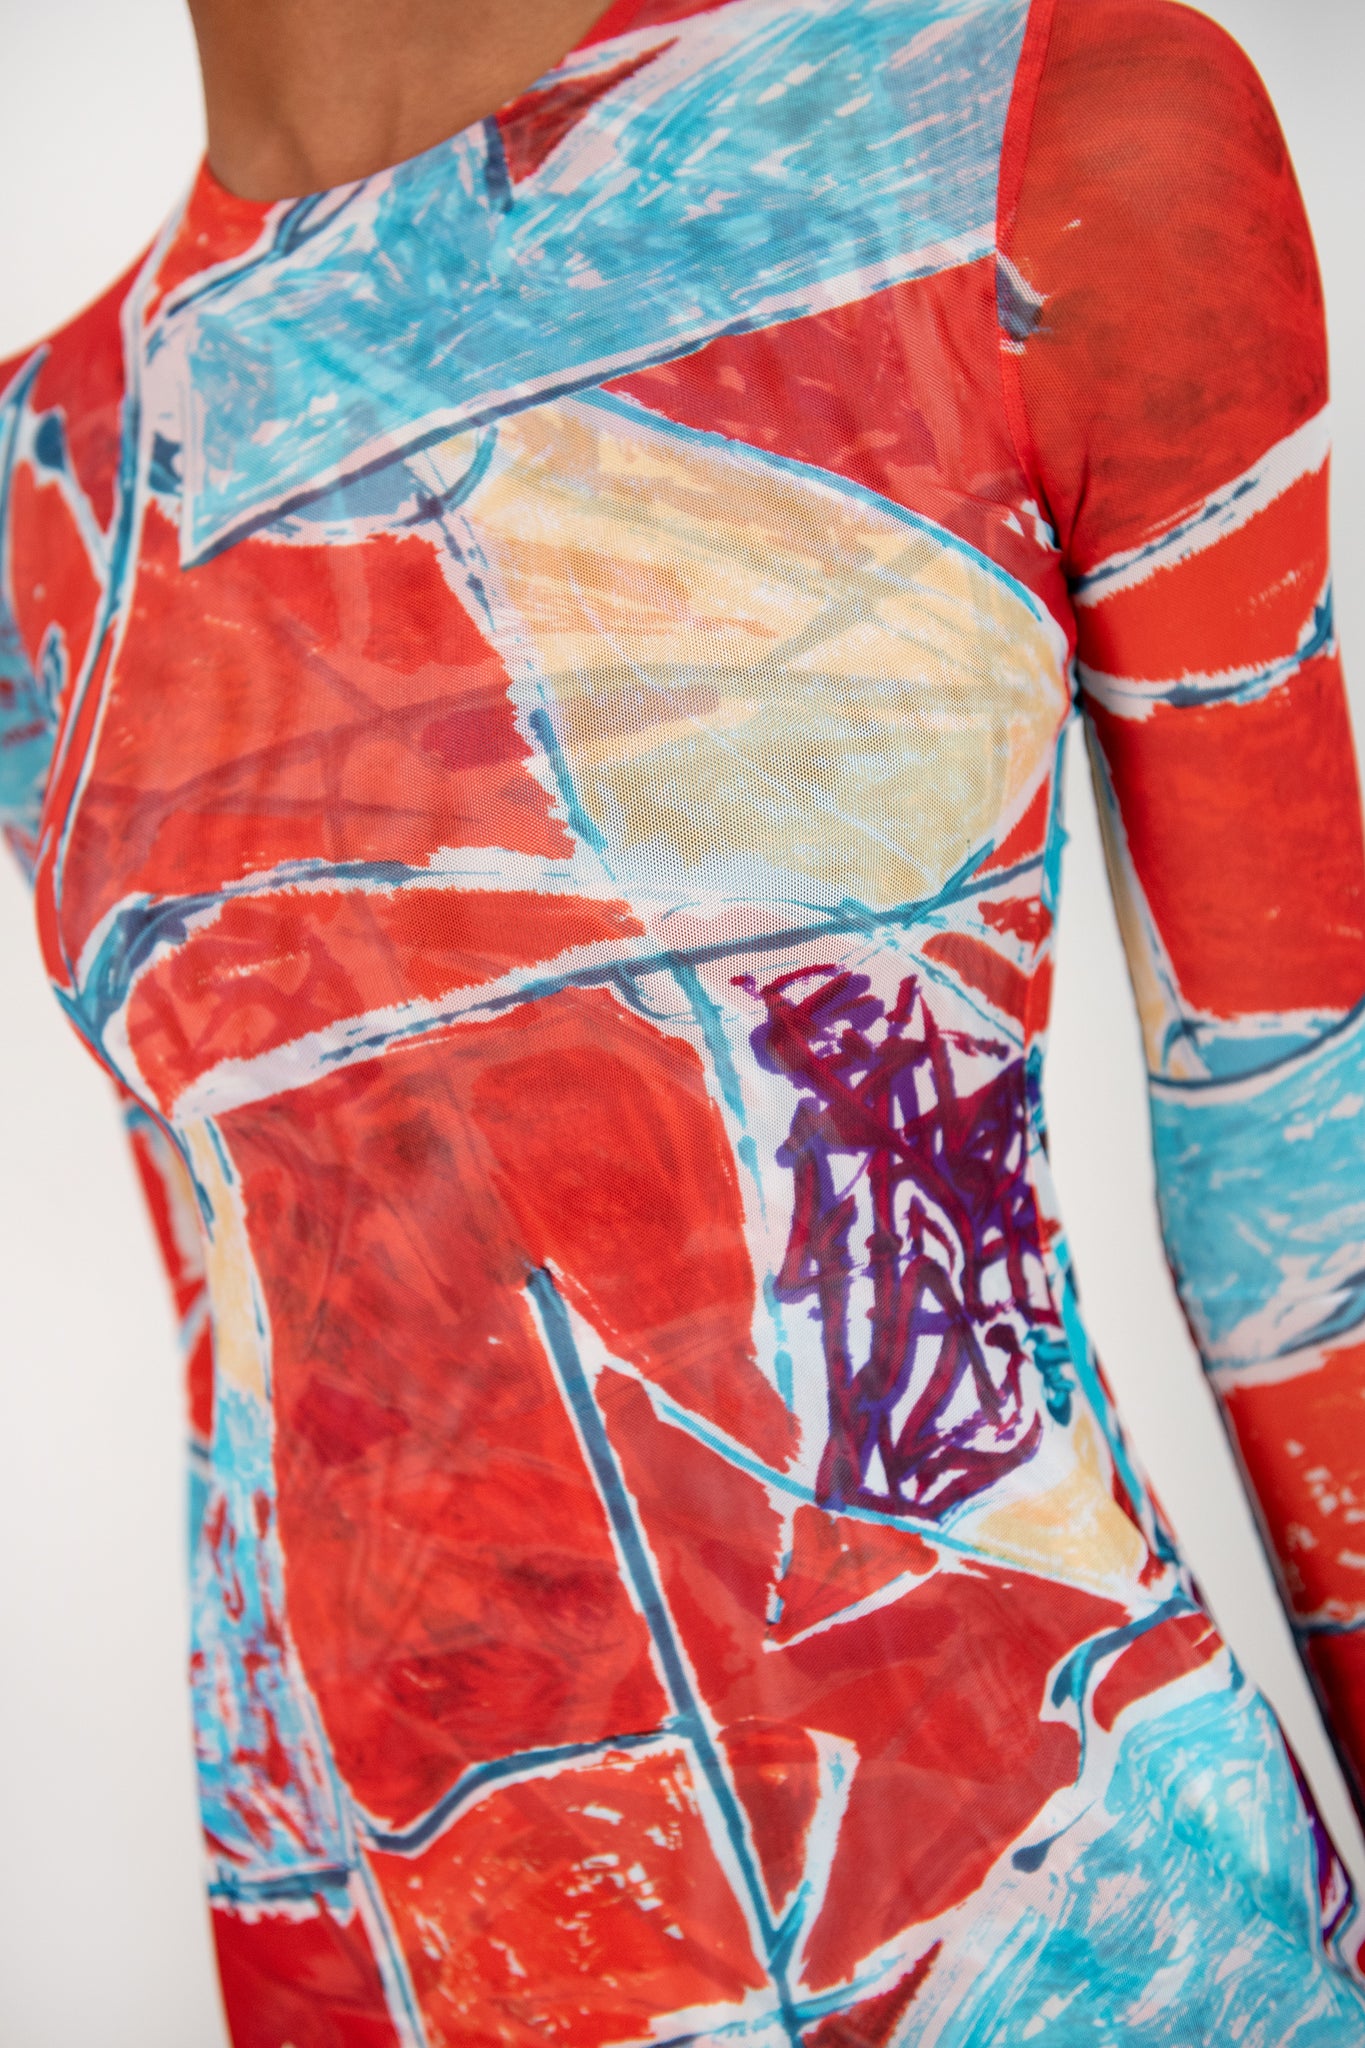 ROSETTA GETTY - Long Sleeve Crewneck Dress, Abstract Print